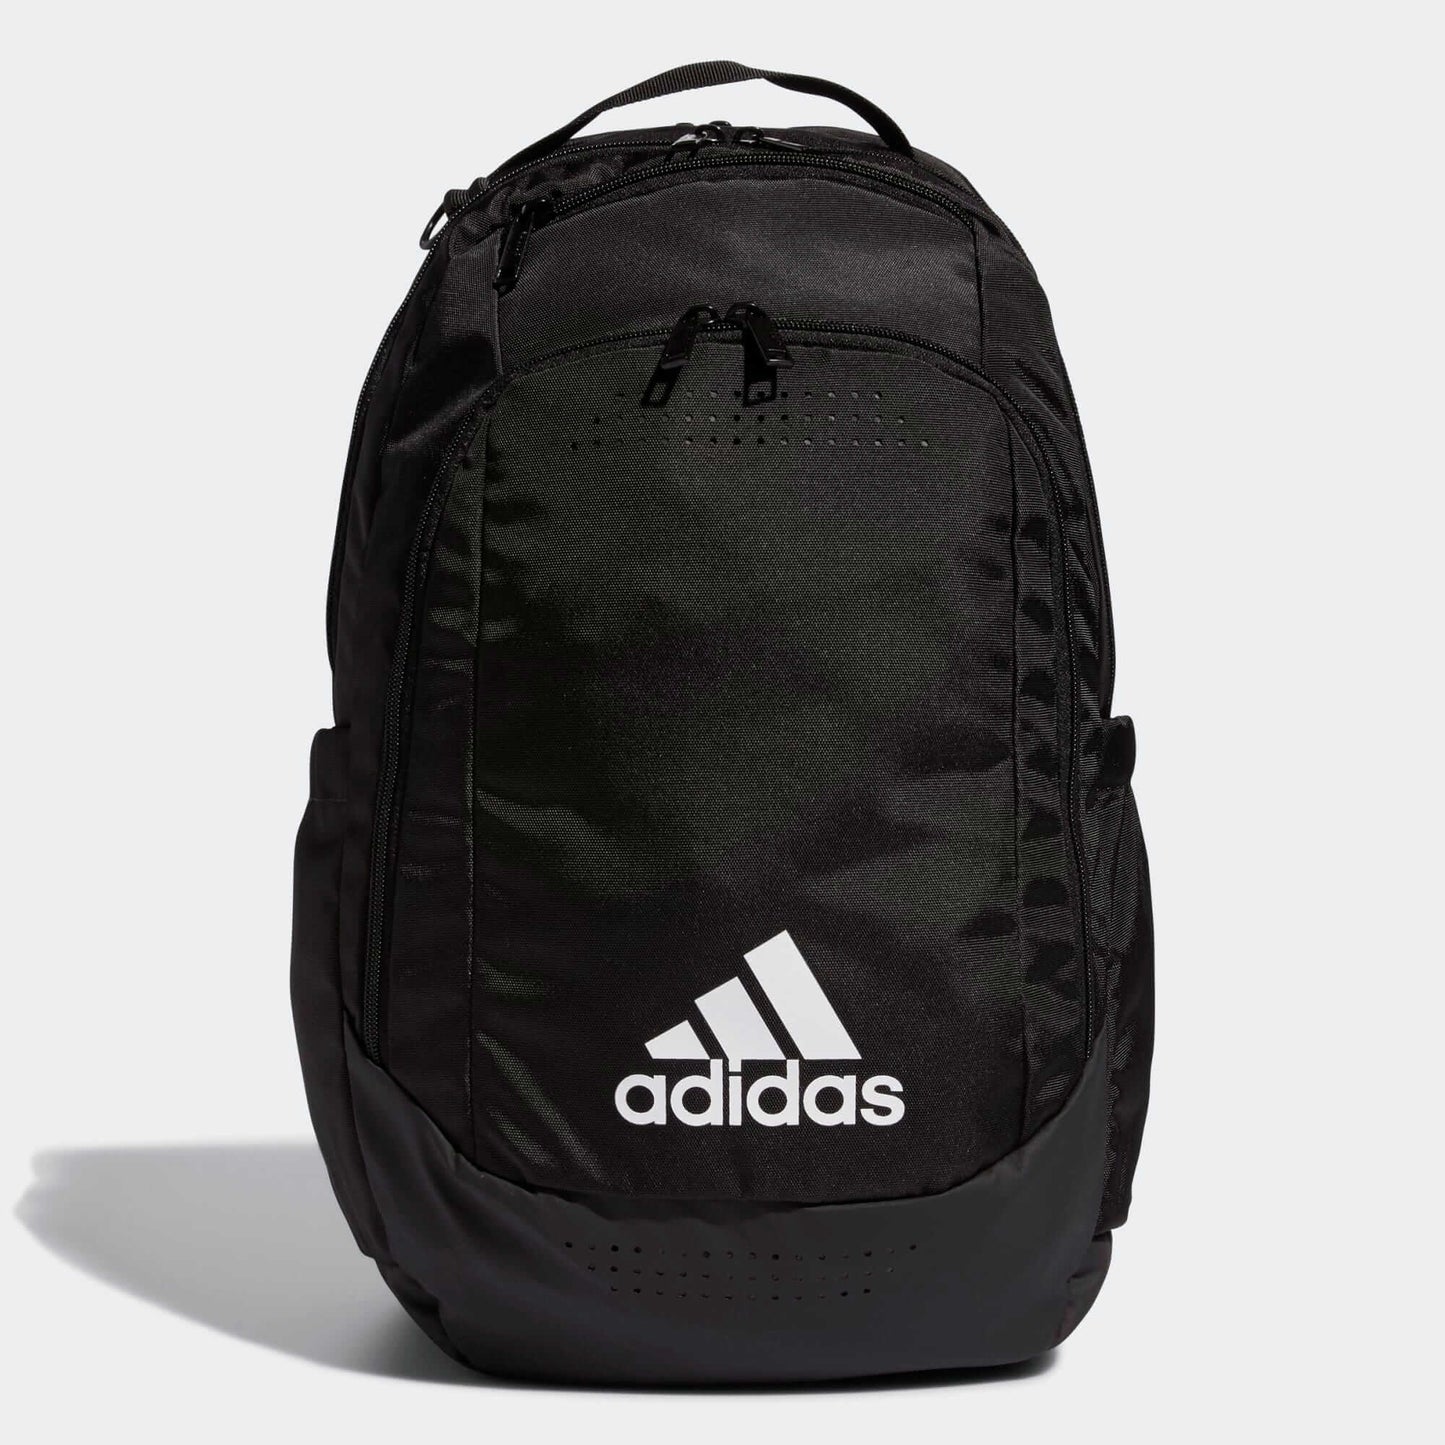 adidas Defender Backpack Black-White